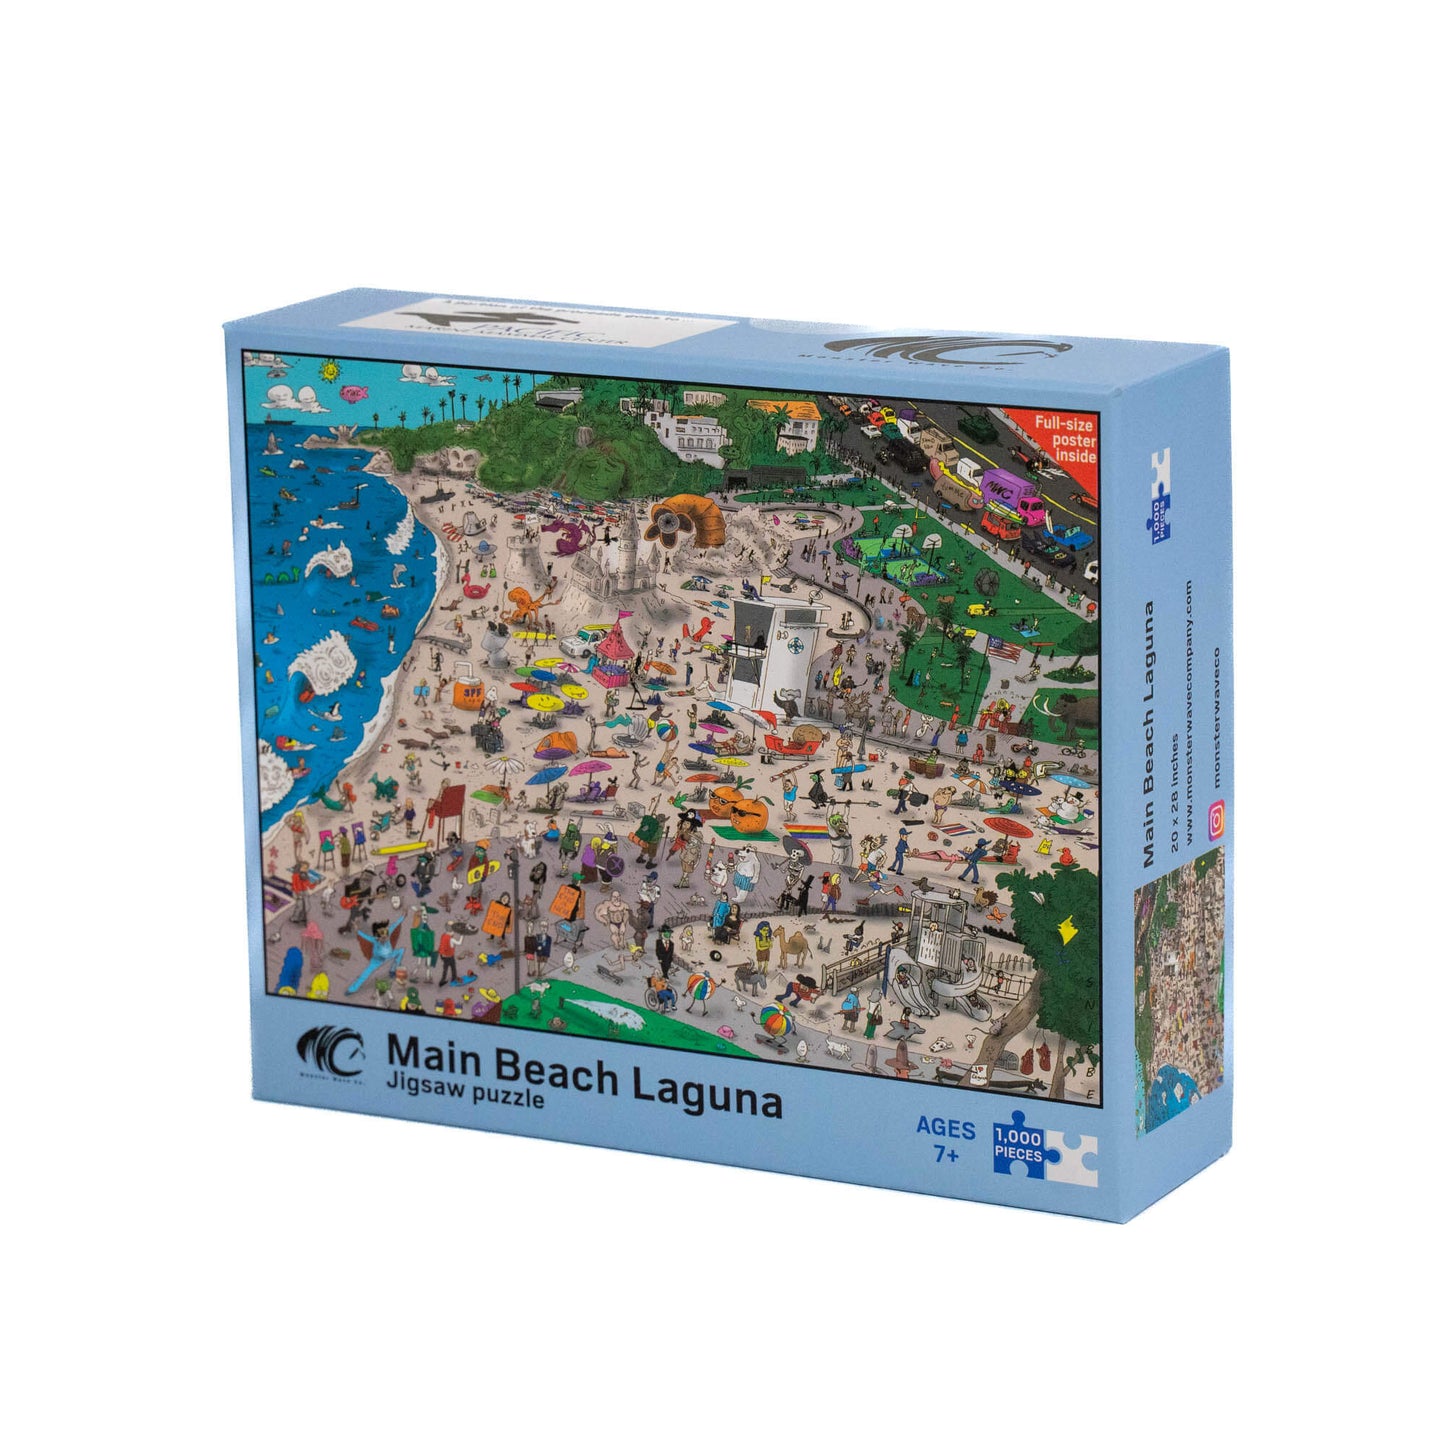 Main Beach Laguna - 1,000 Piece Jigsaw Puzzle